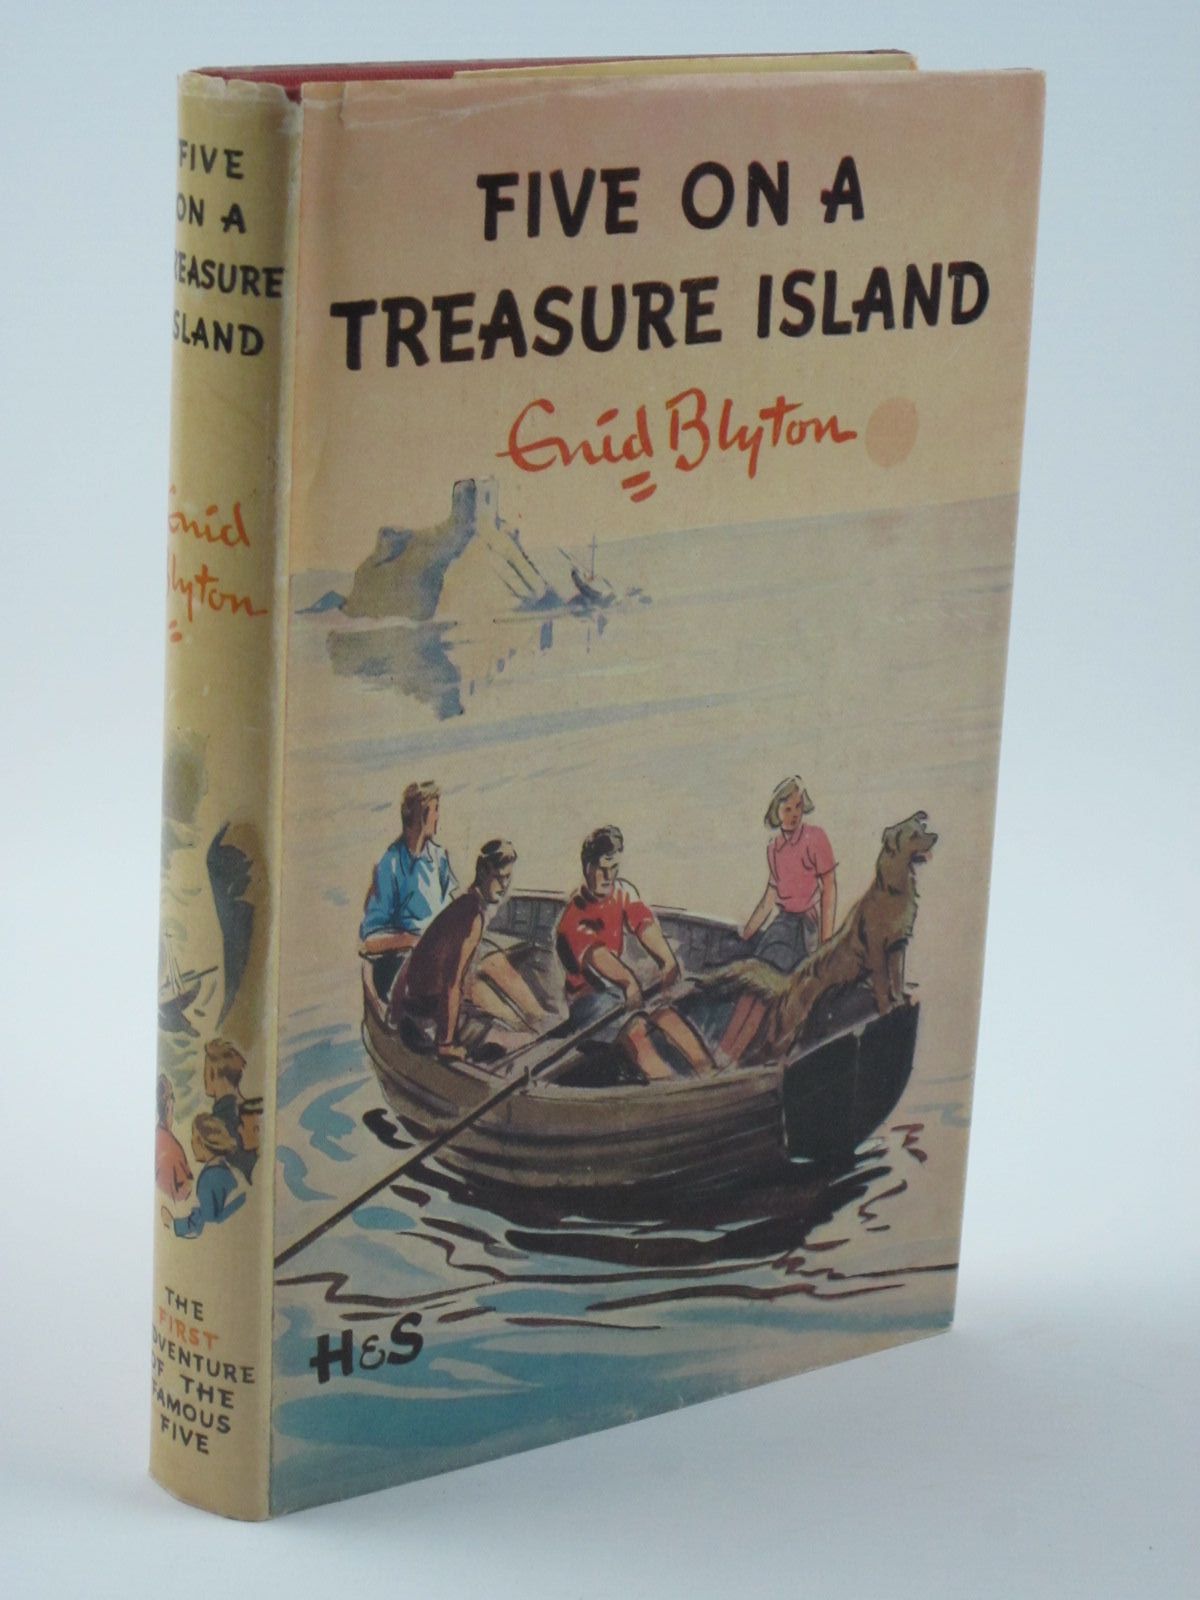 treasure island written